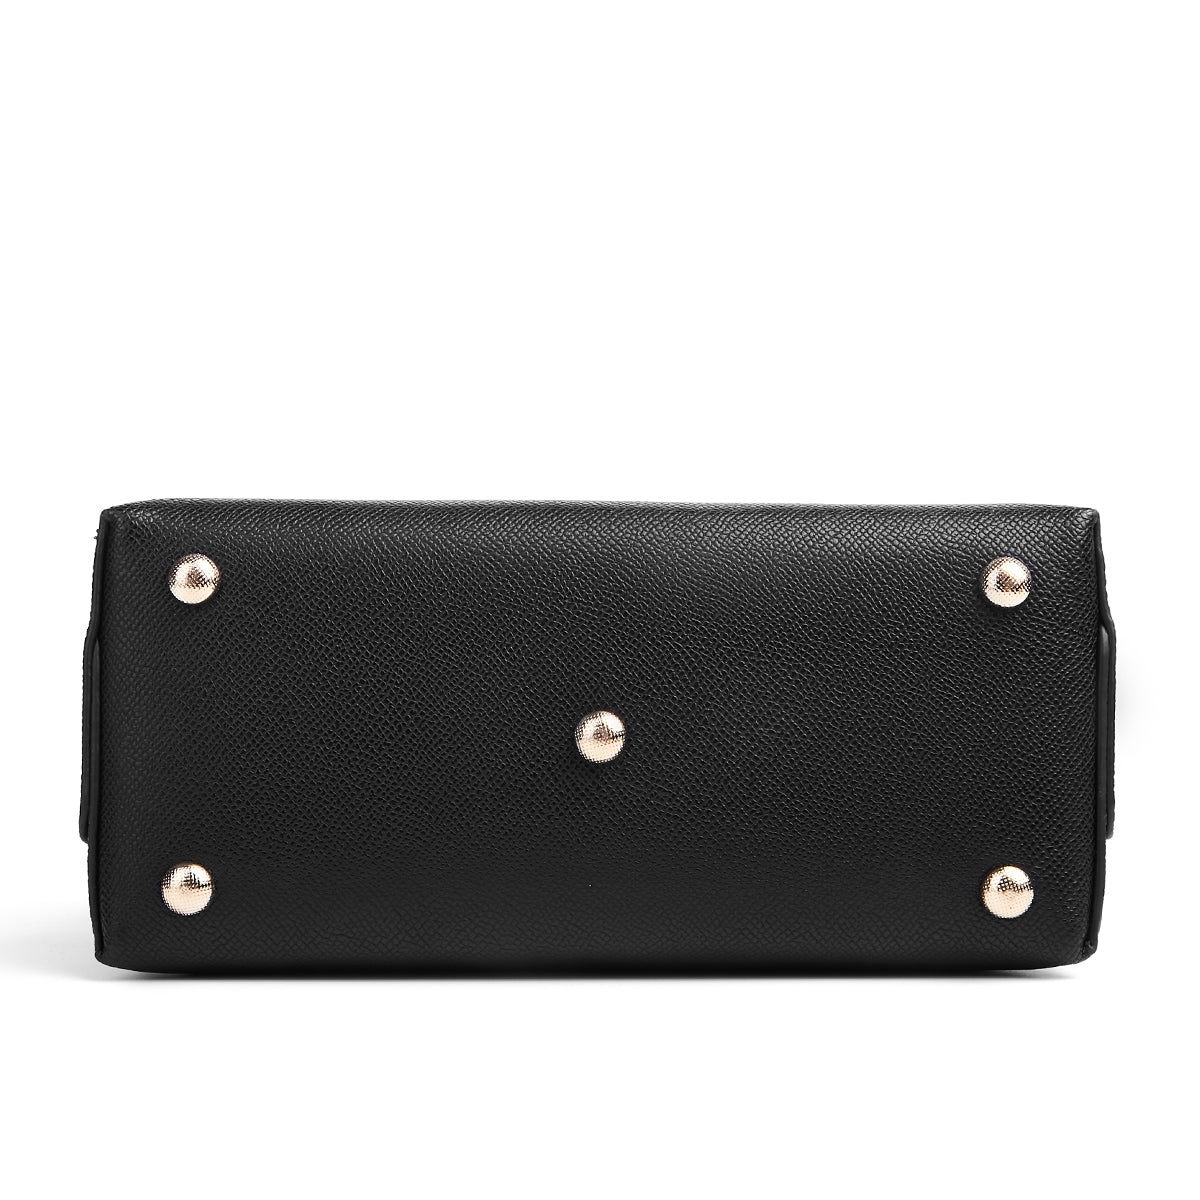 Black small shoulder handbag